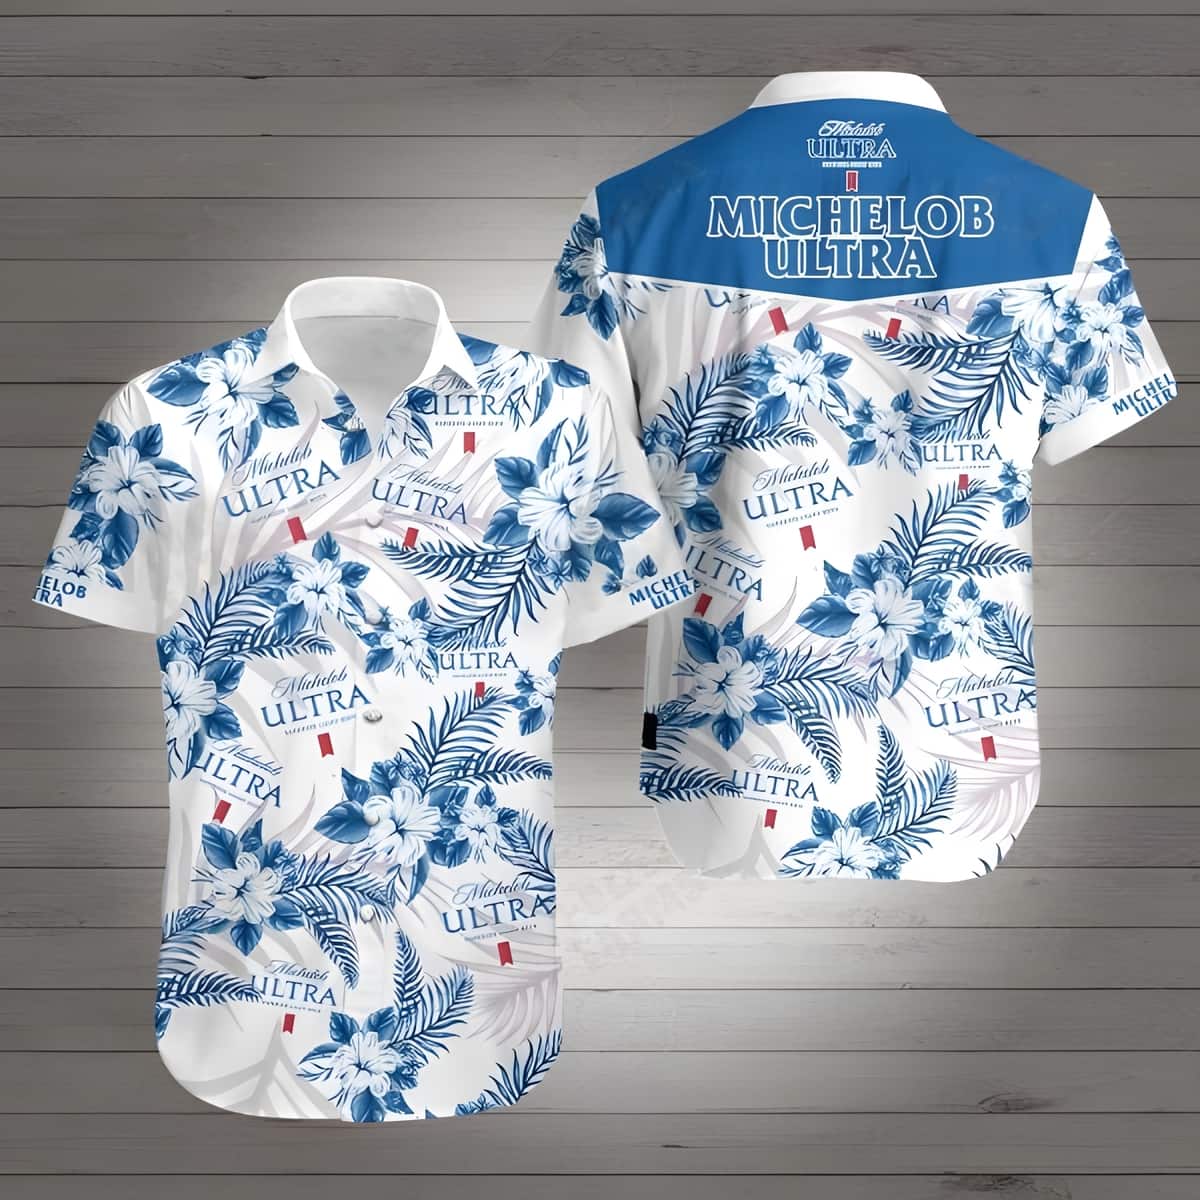 https://cdn.trendingshirtstore.com/761650/michelob-ultra-blue-hibiscus-flower-gift-for-beer-drinkers-hawaiian-shirt_1x1.jpg